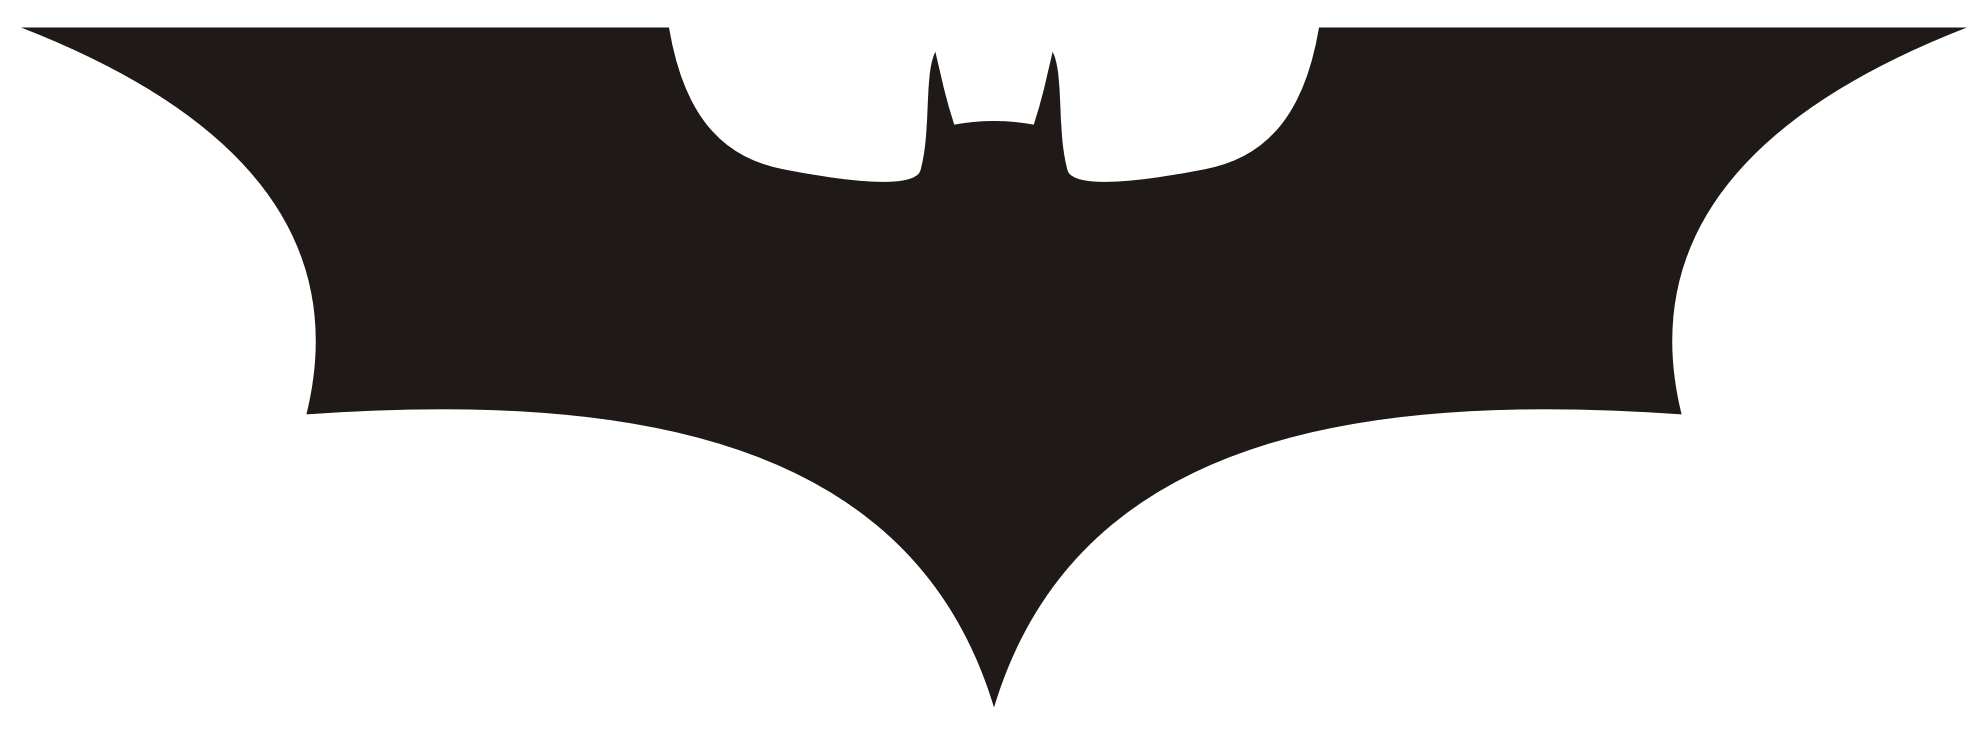 Batman Logos and Batman fan art - Clipart library - Clipart library